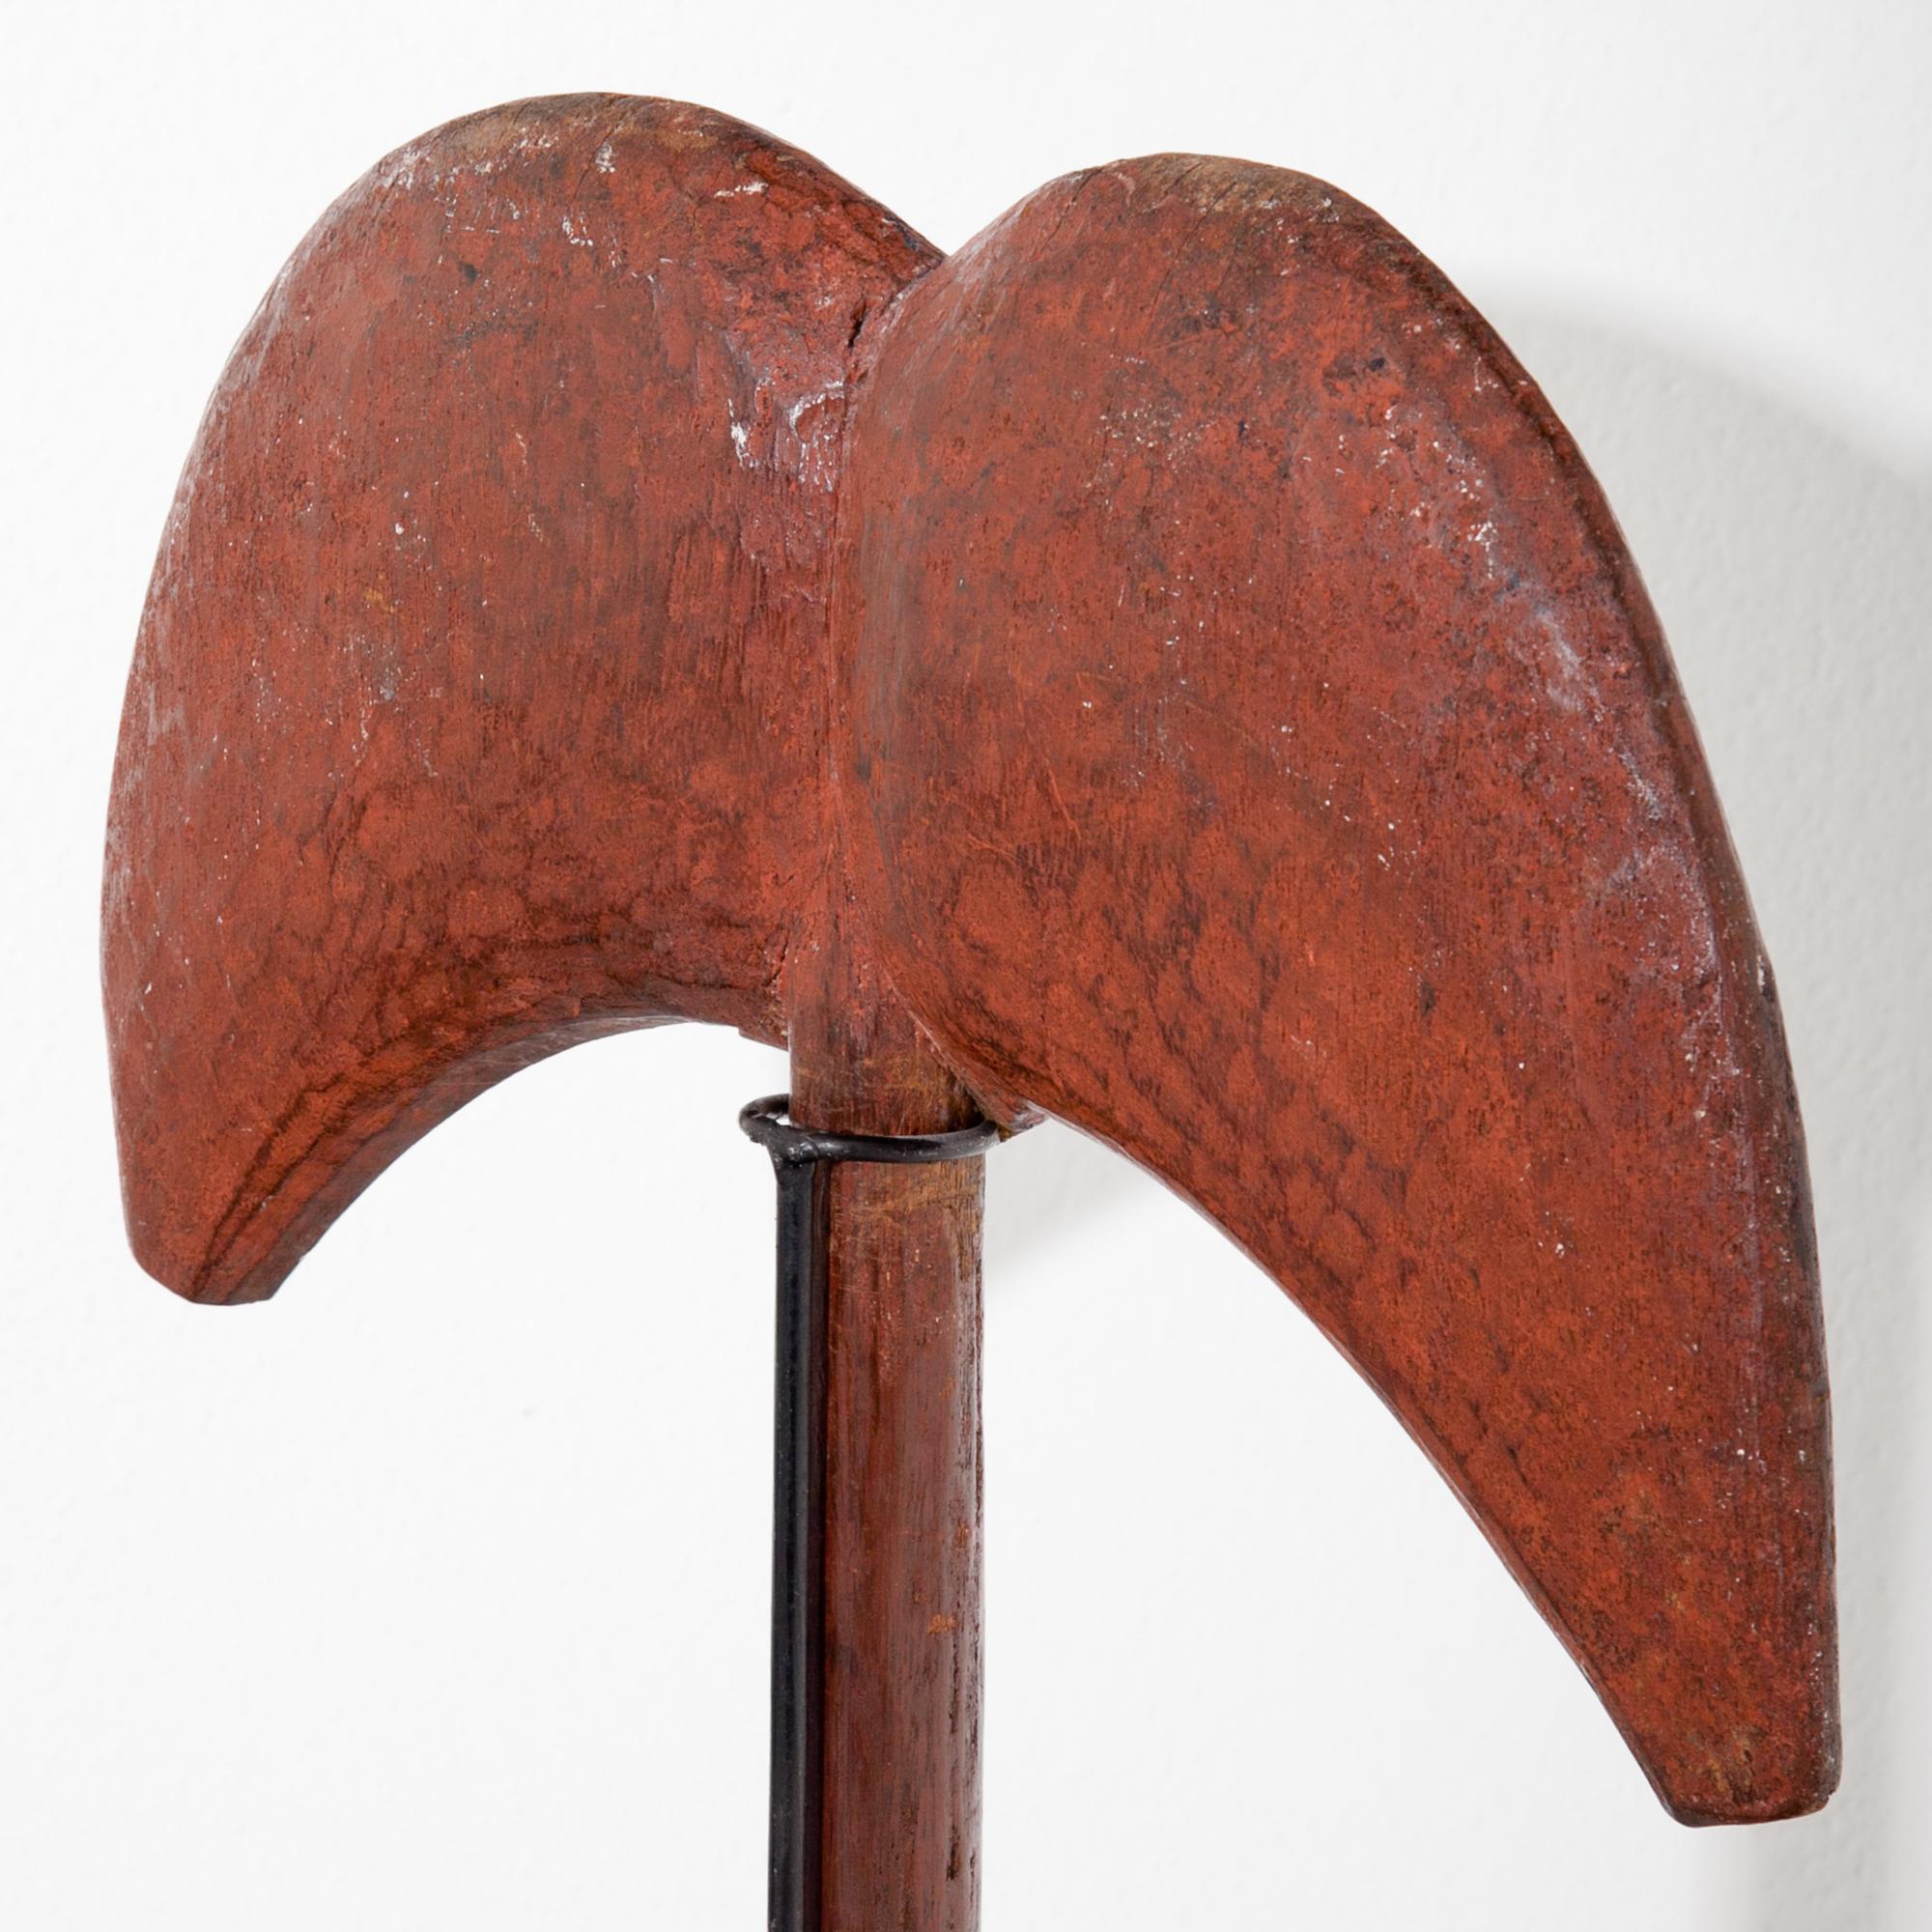 Nigerian Shango-Rod of the Yoruba, Nigeria, circa 1880-1920